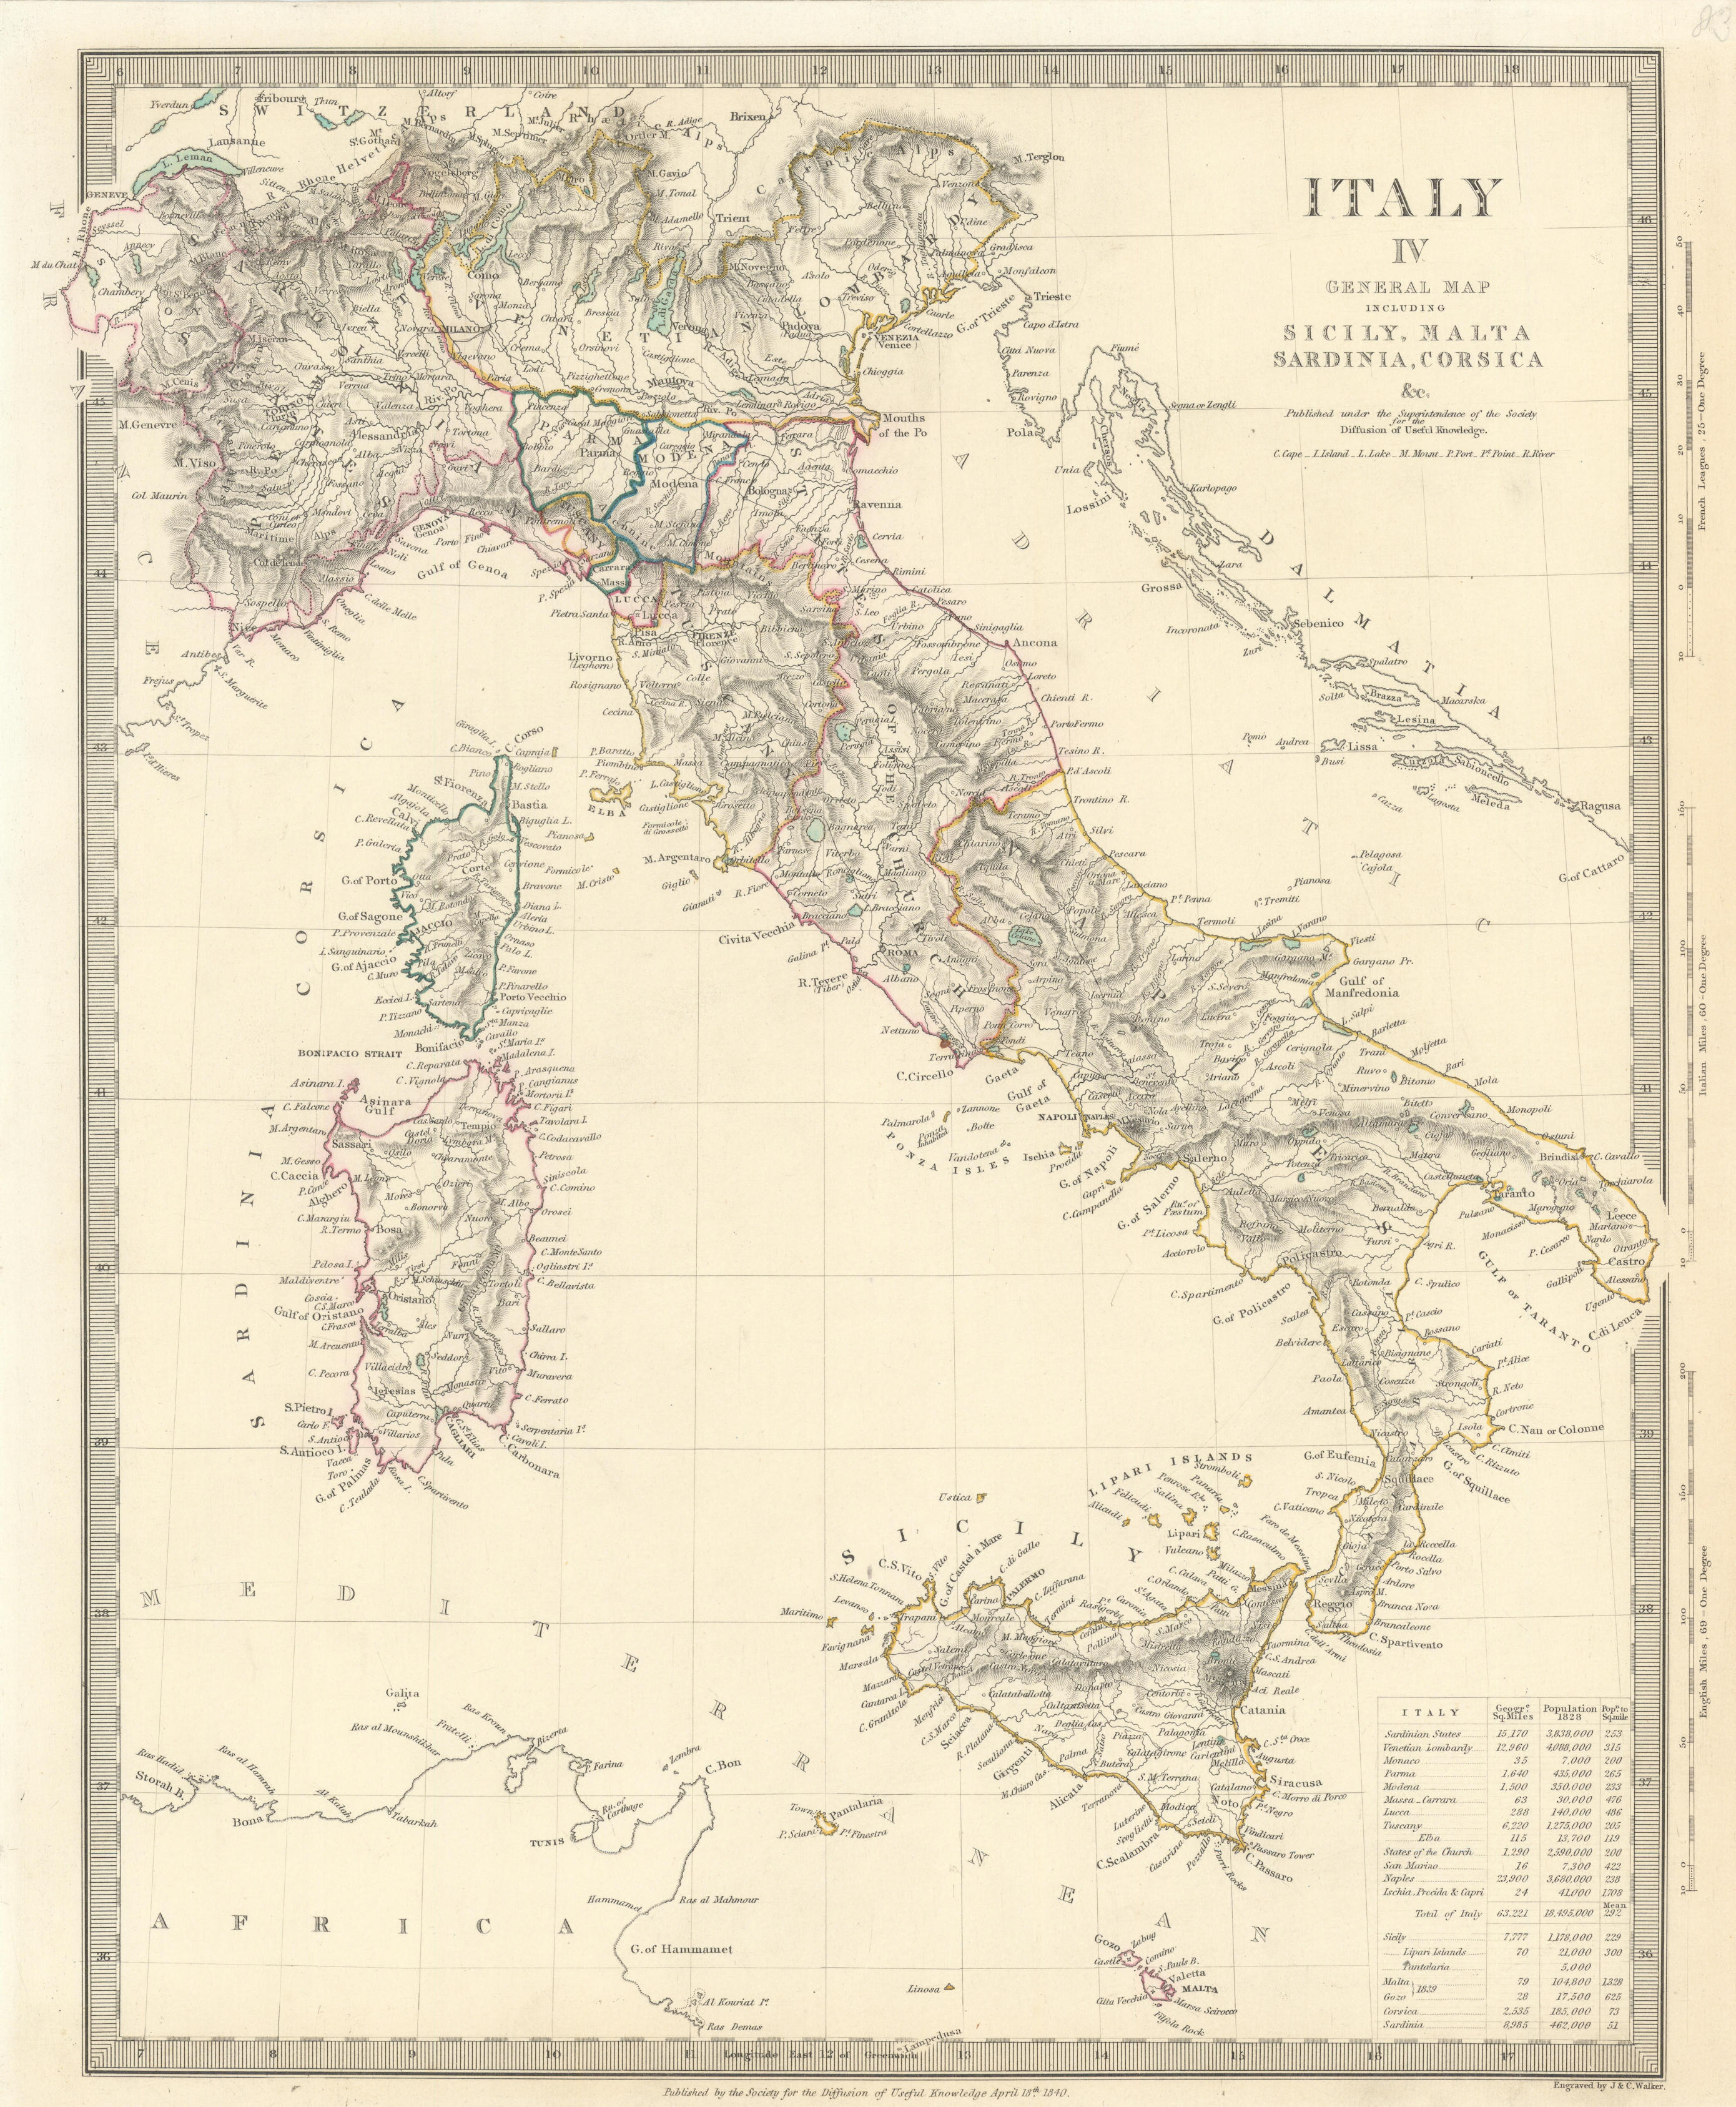 ITALY. General Map. Sicily Malta Sardinia Corsica. Population table. SDUK 1844